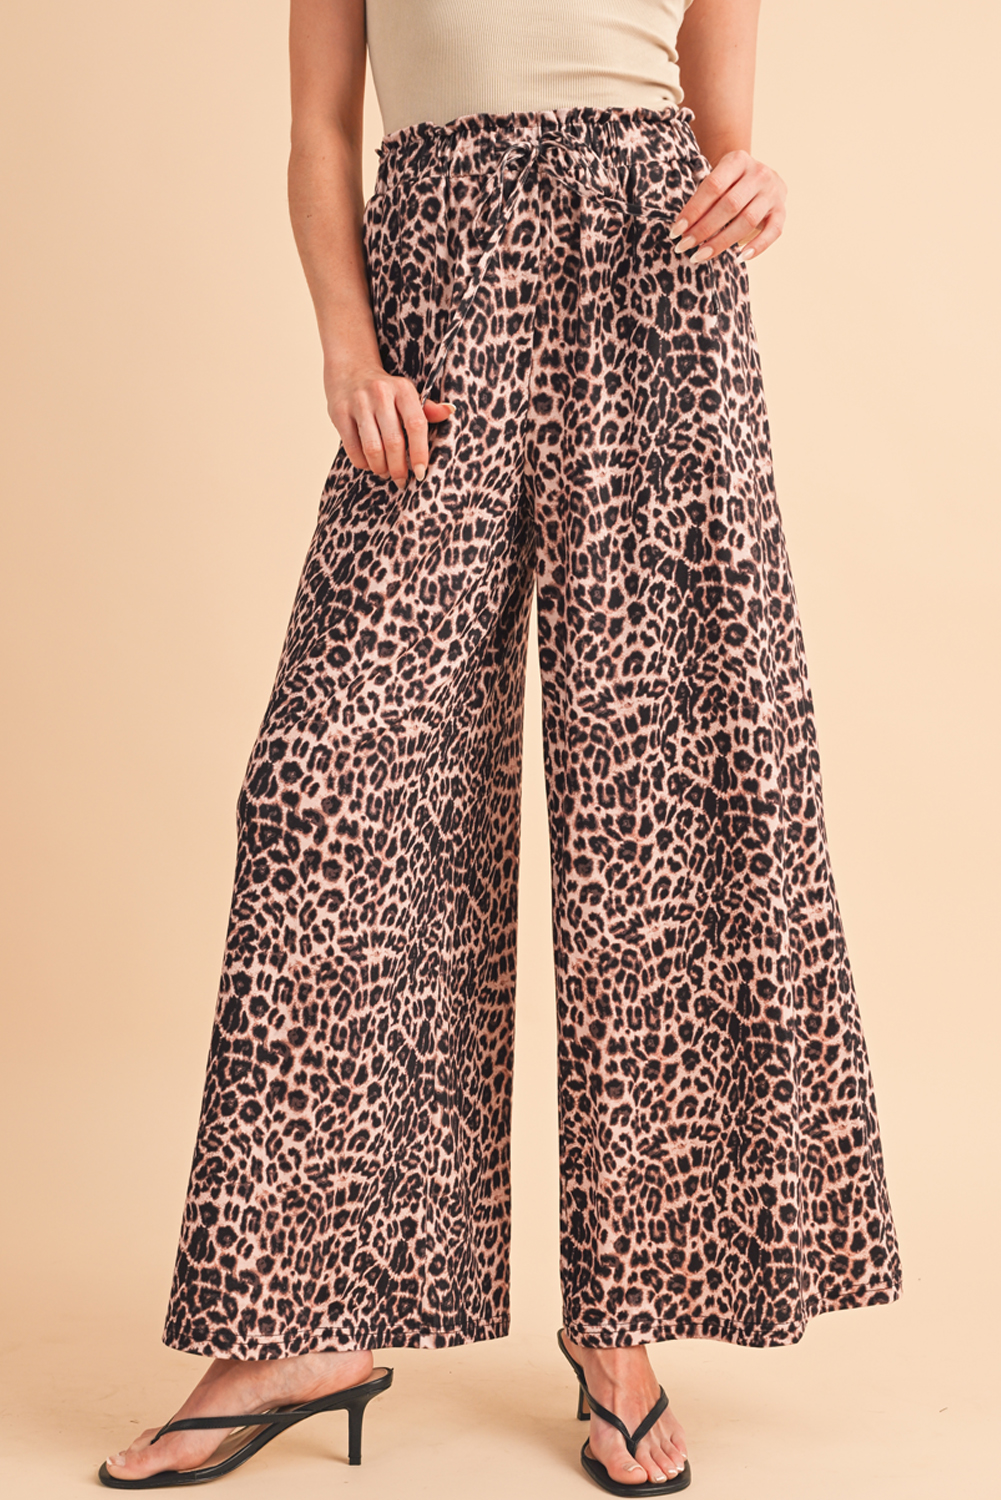 Shewin Wholesale Chic Women Desert Palm Boho Leopard Print Wide Leg PANTS